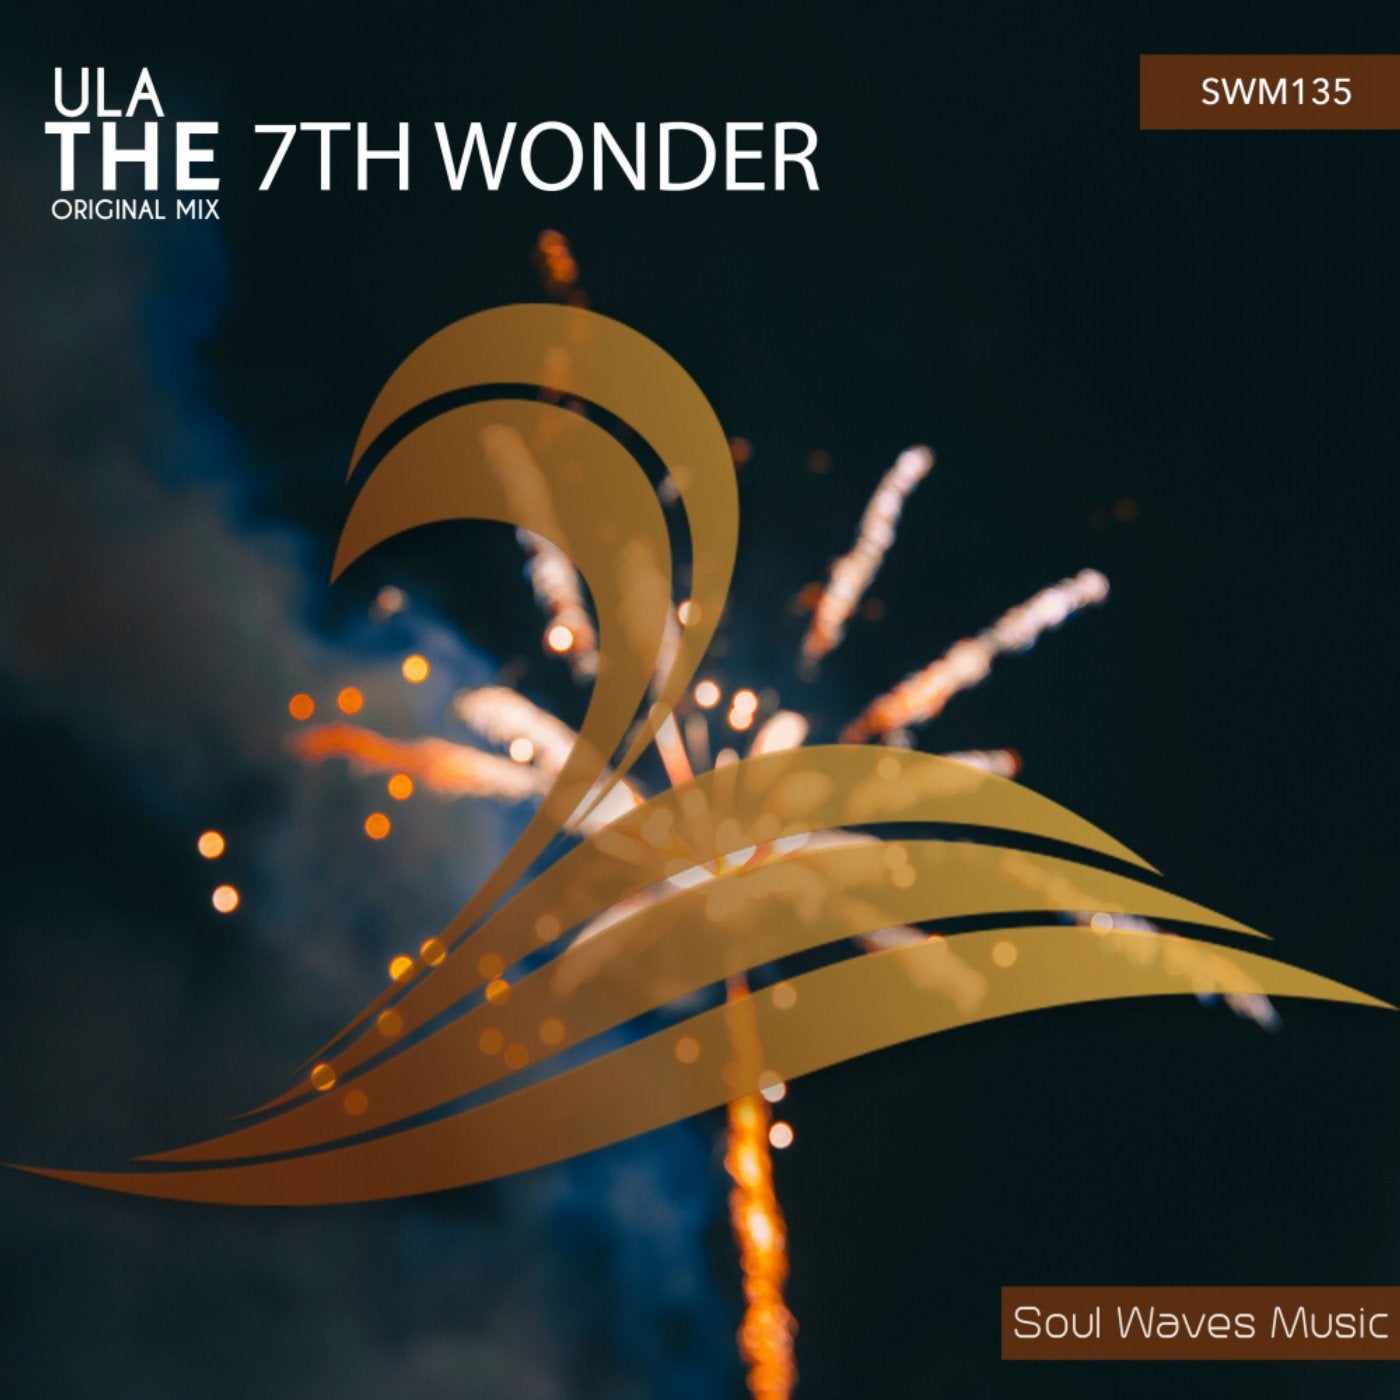 The 7th Wonder